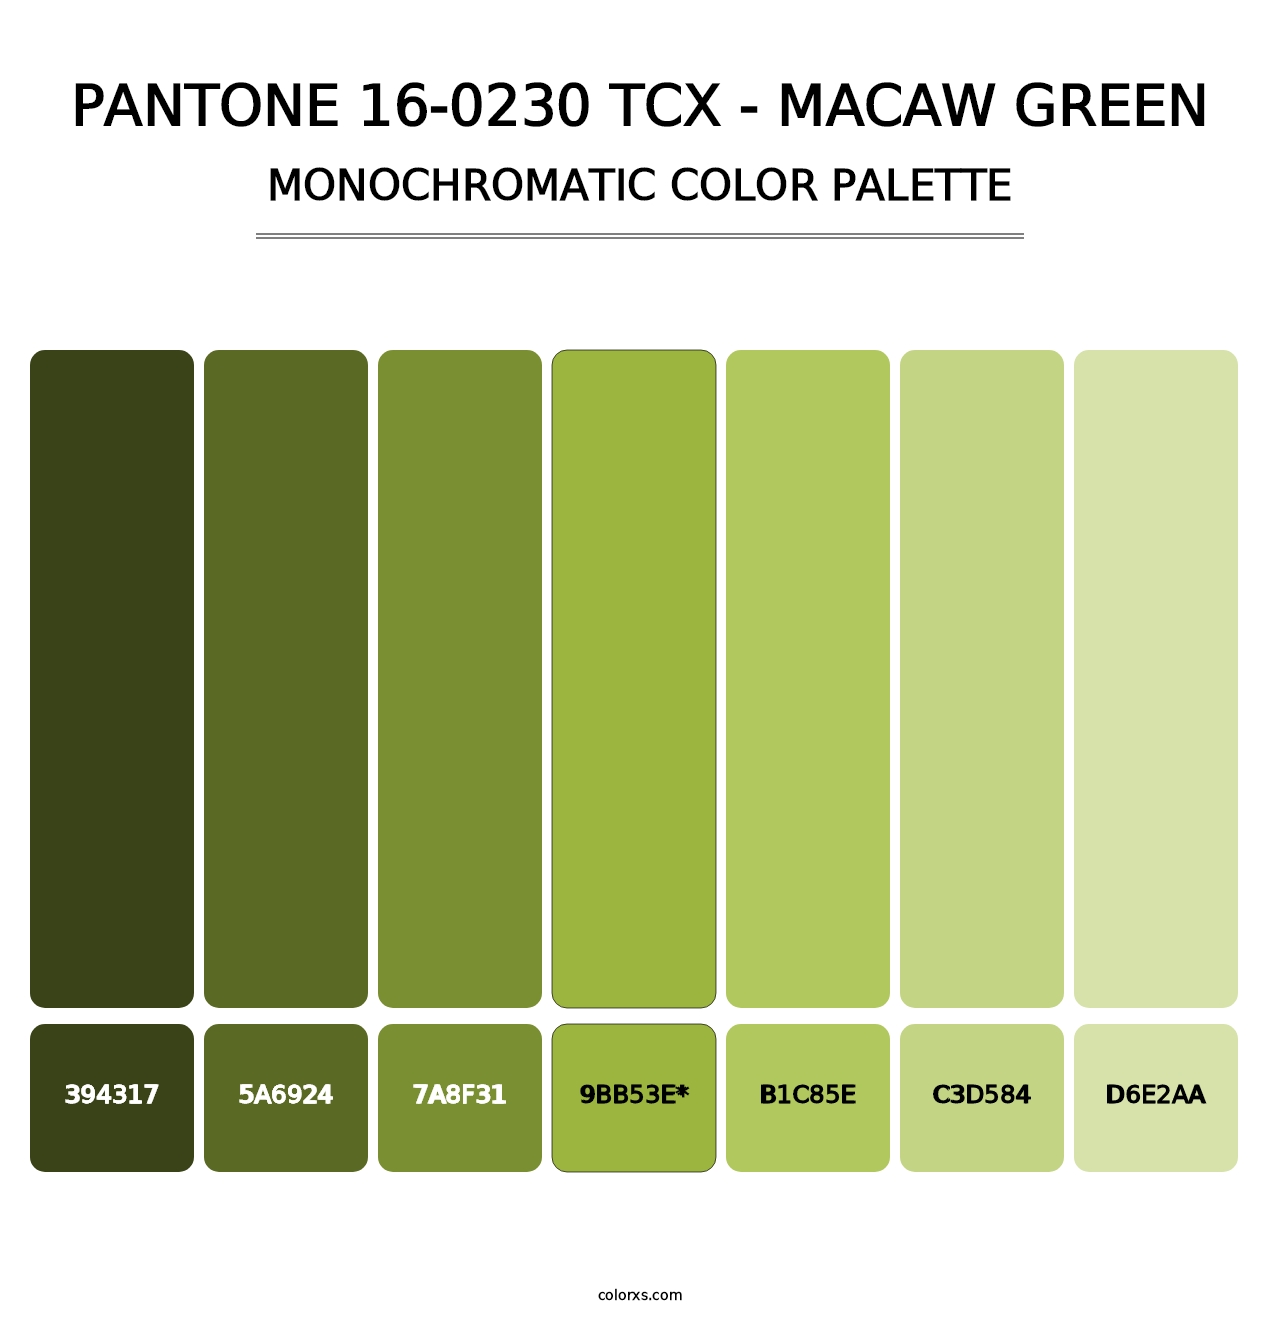 PANTONE 16-0230 TCX - Macaw Green - Monochromatic Color Palette